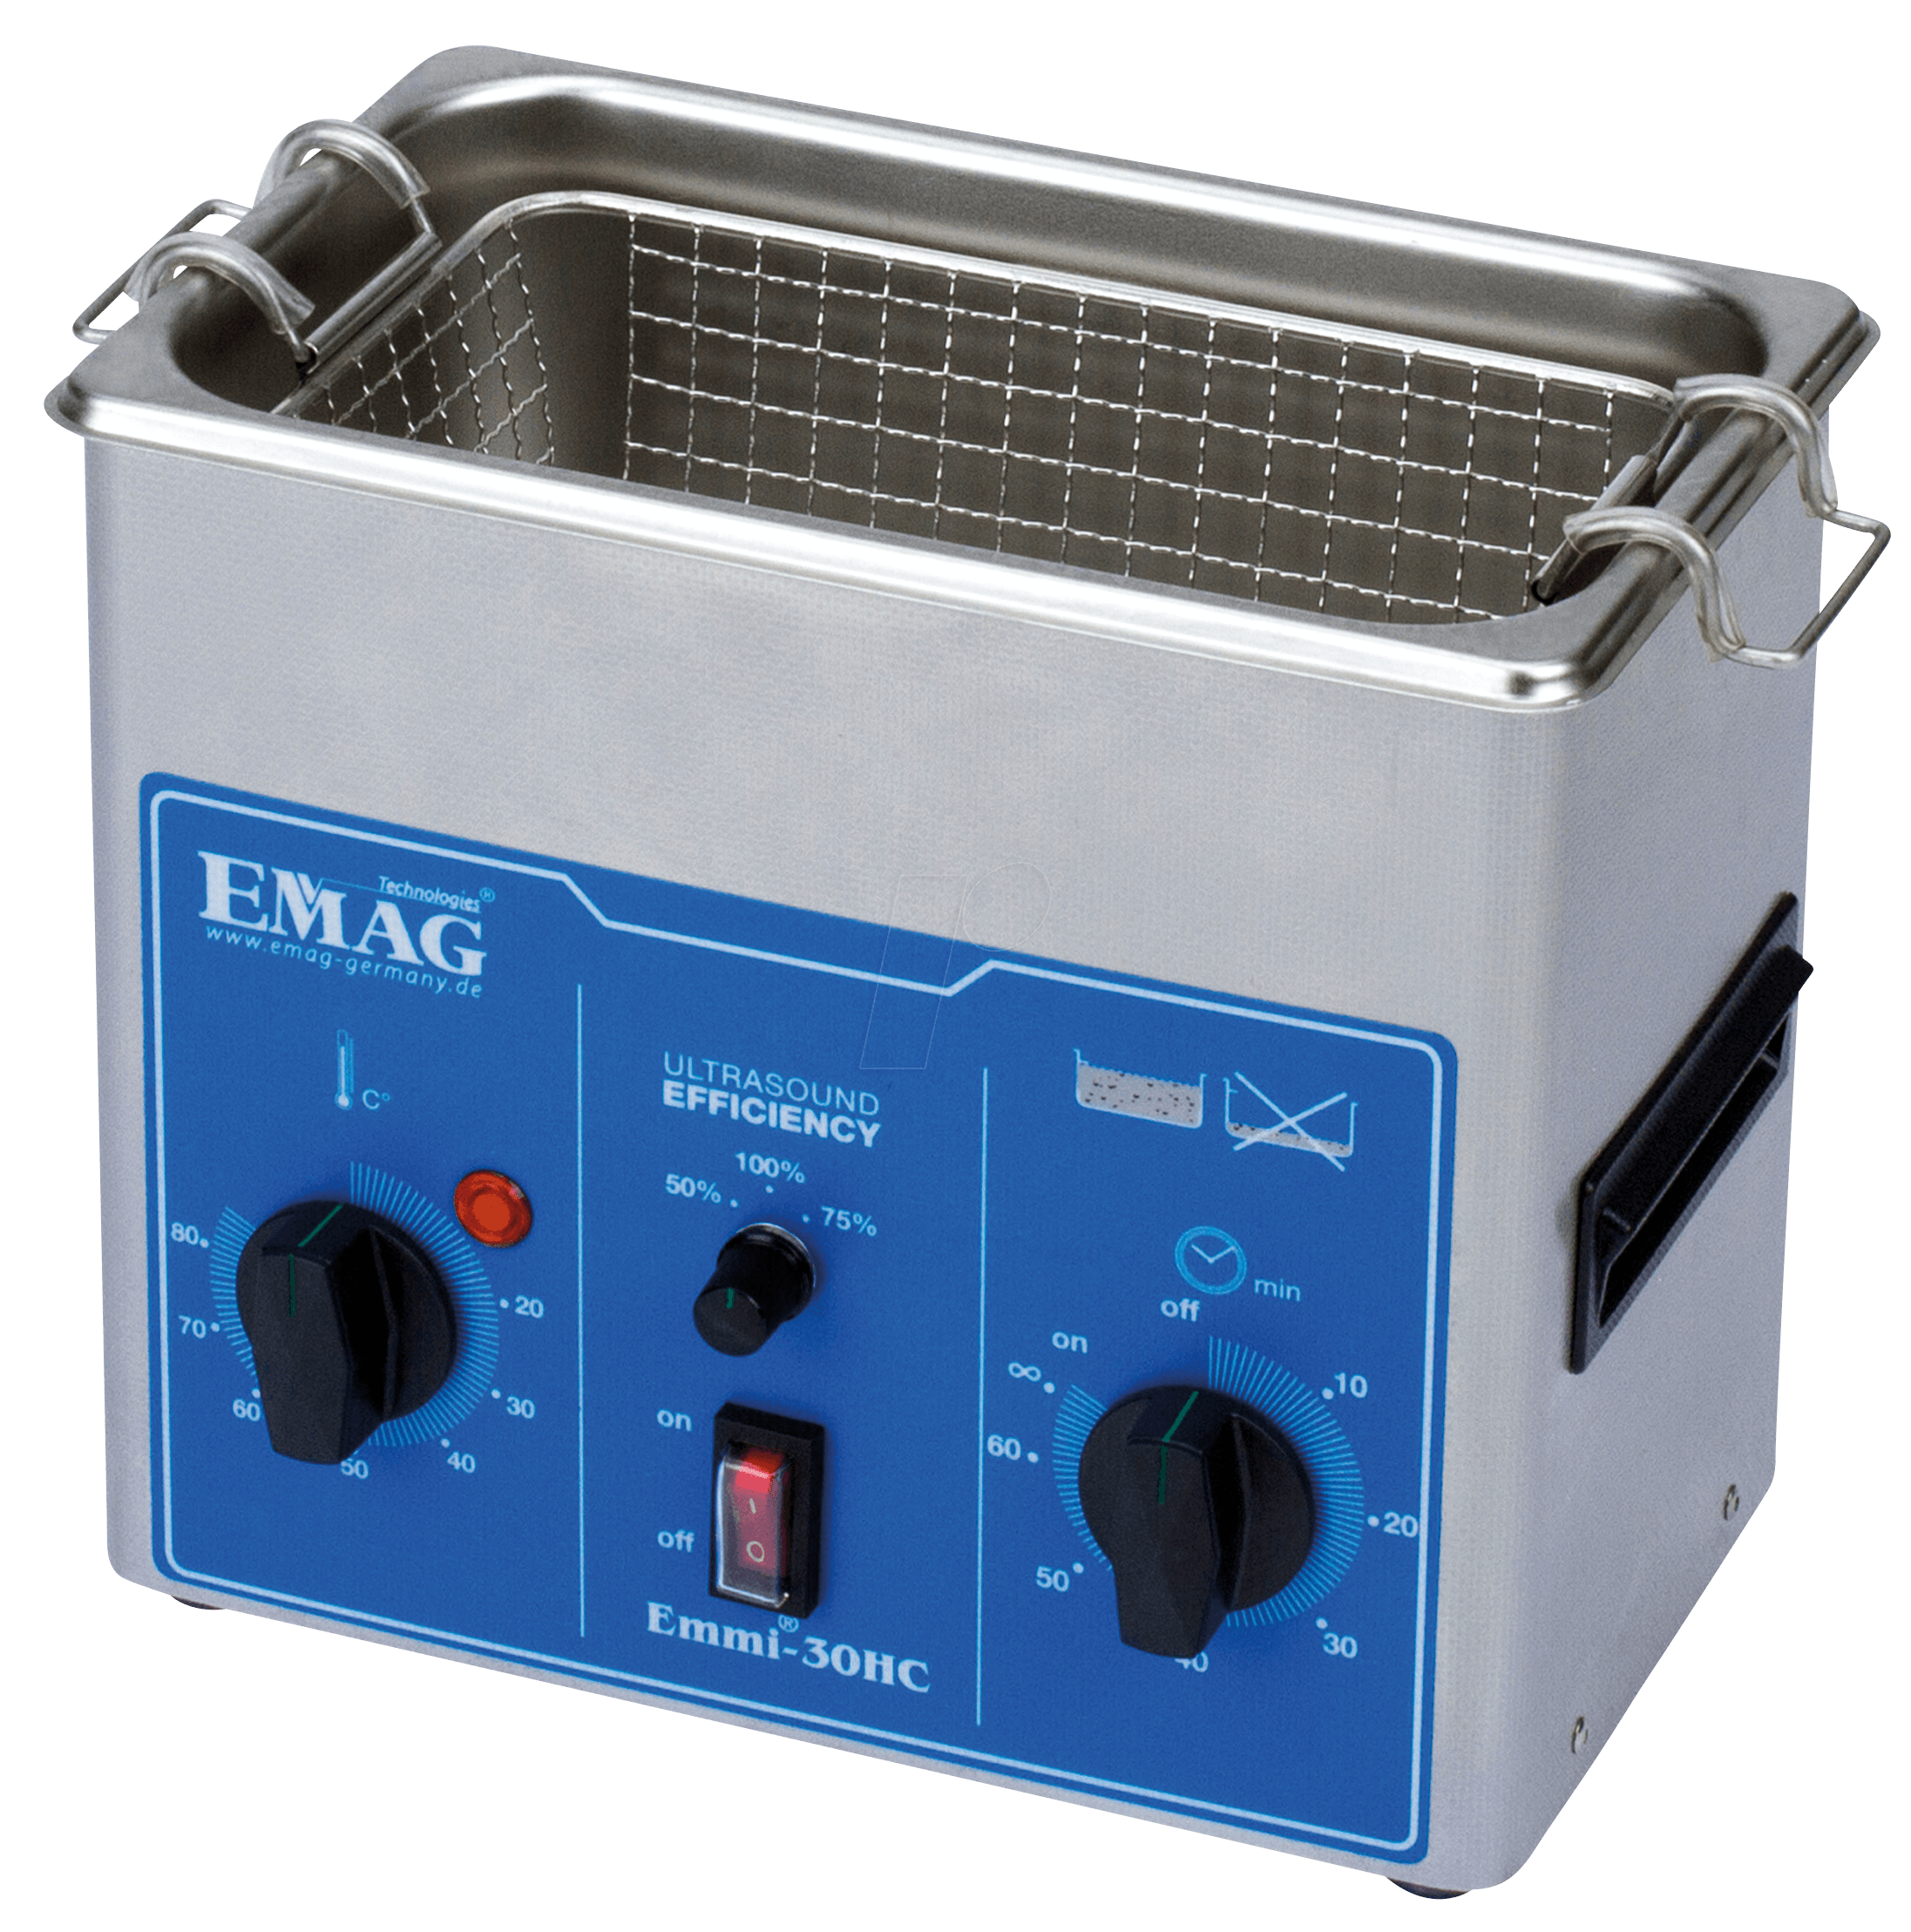 EMMI 30 HC: Appareil de nettoyage à ultrasons Emmi 30 HC EMAG chez